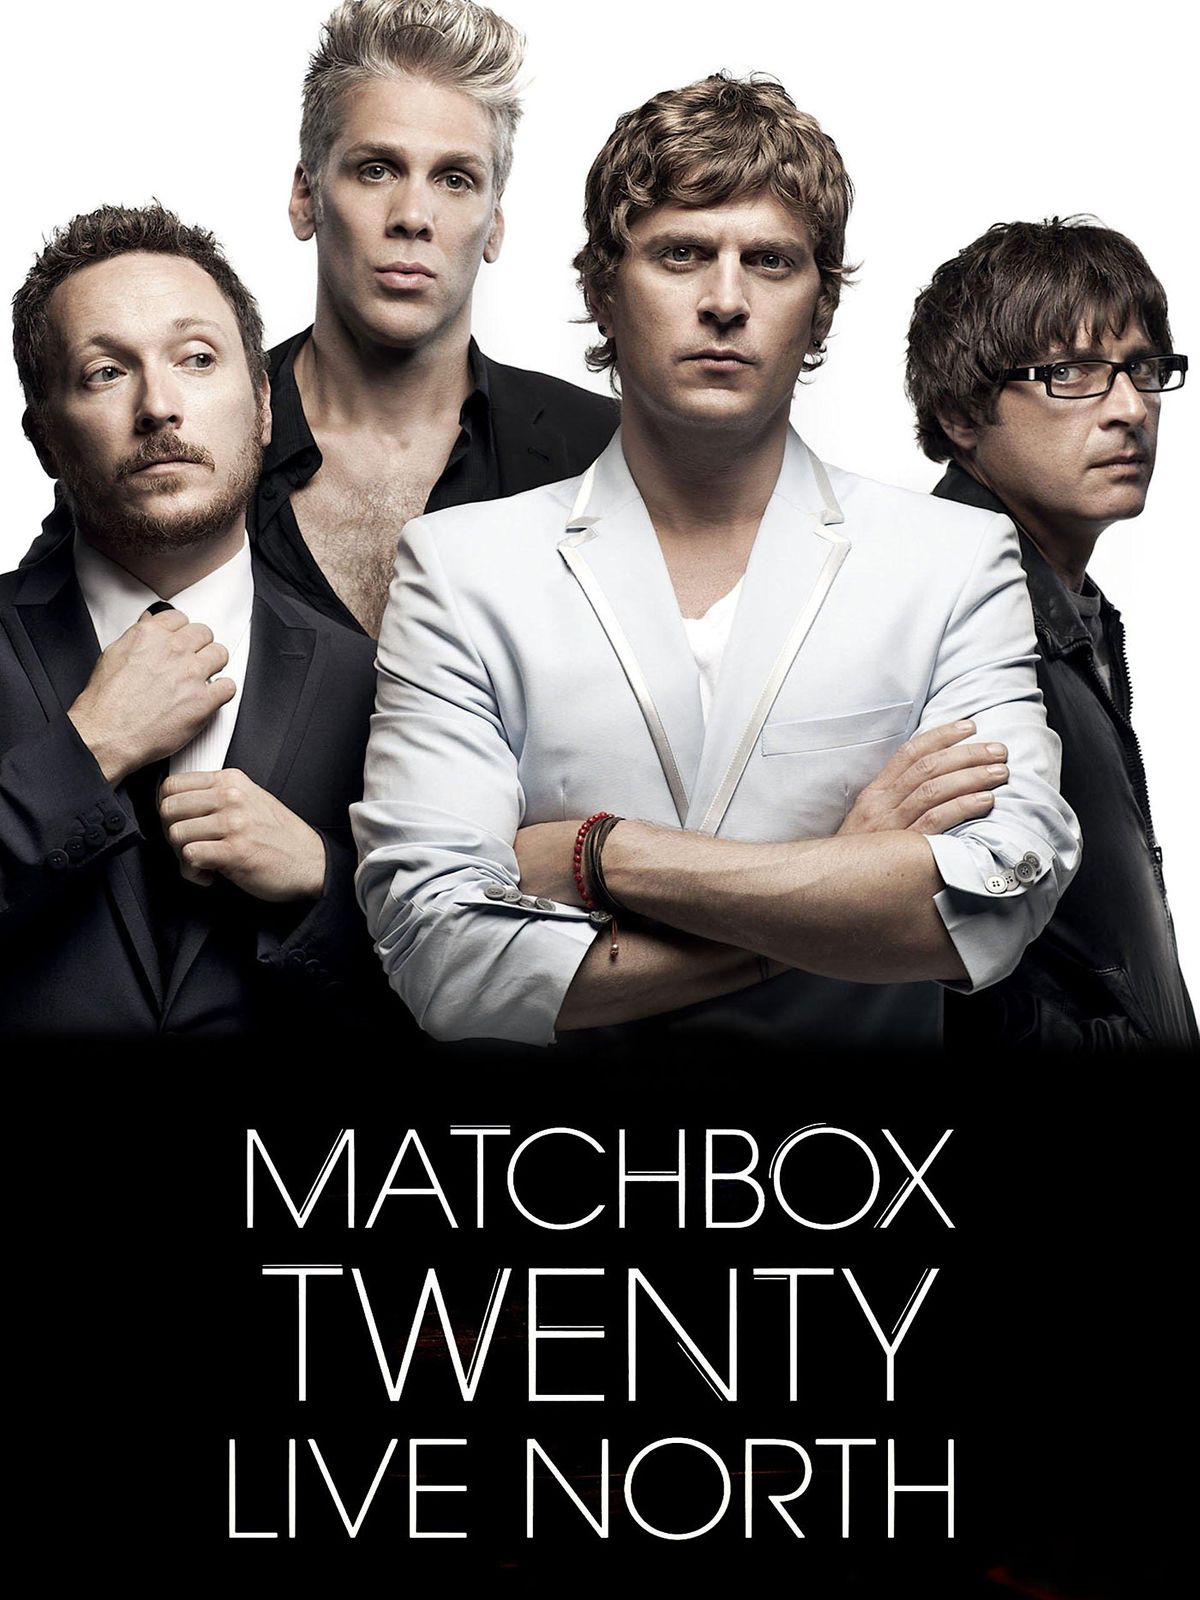 Matchbox Twenty Tickets